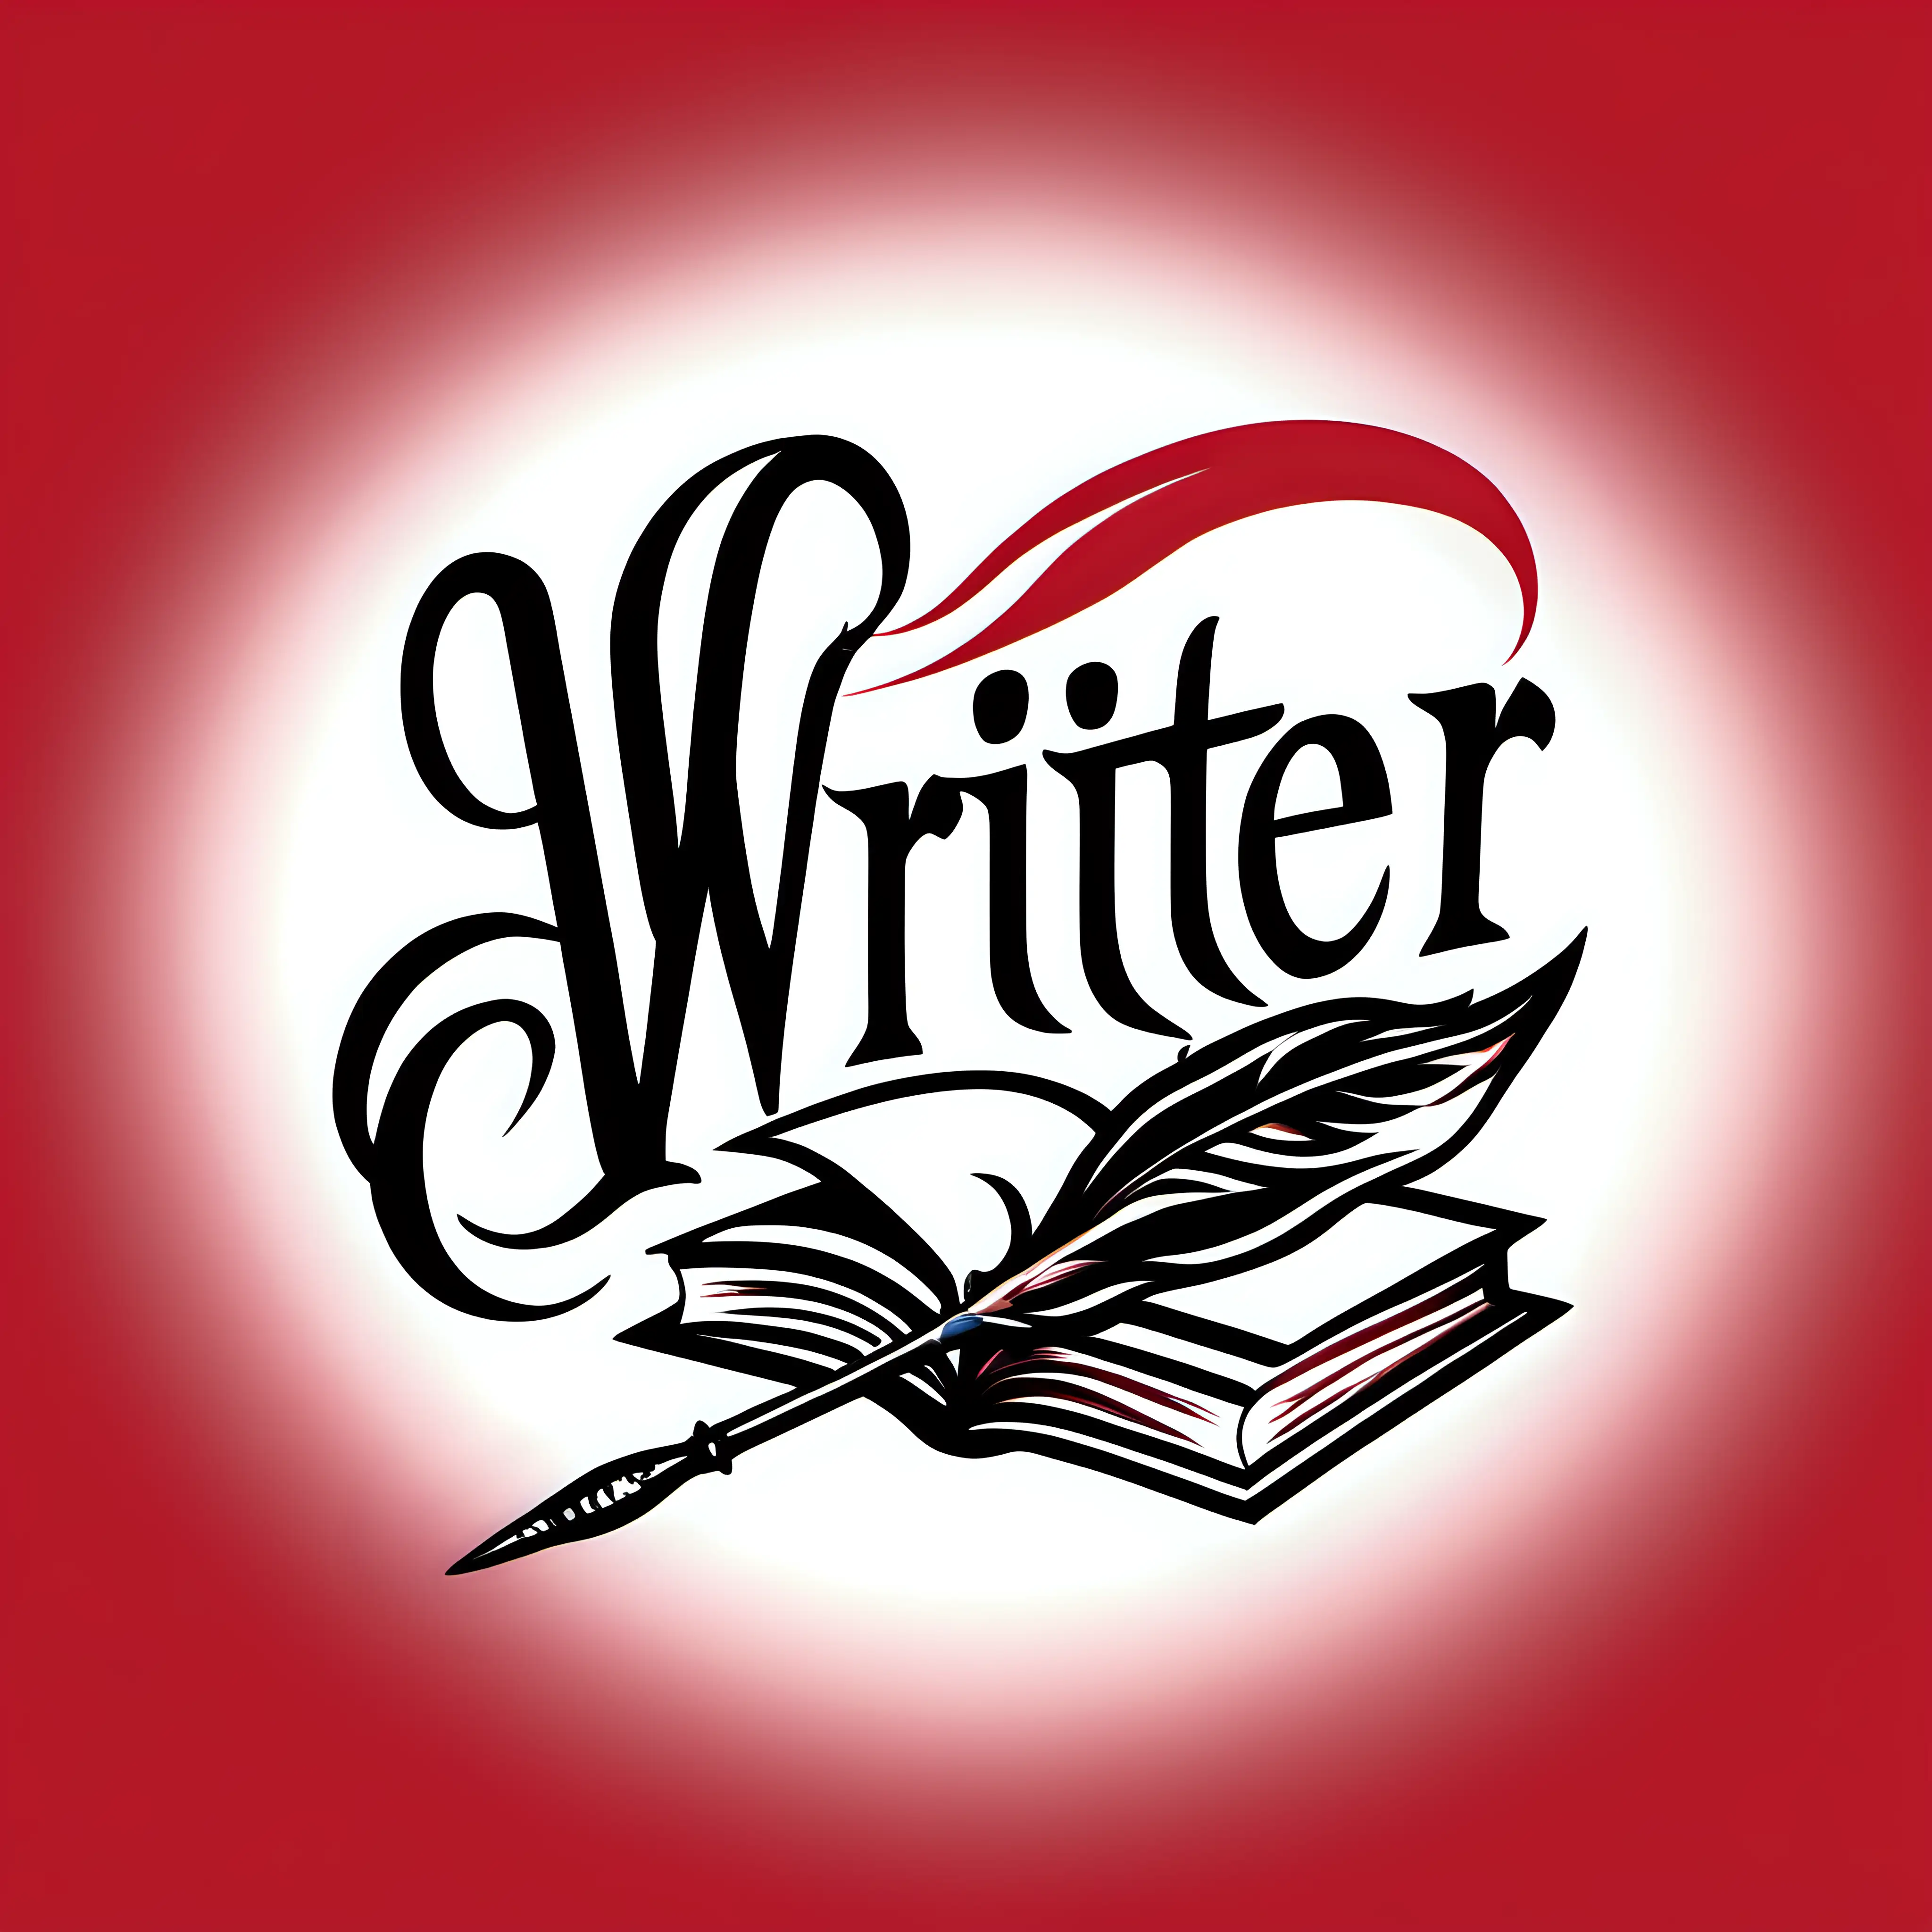 Elegant Writers Logo Feminine Aesthetic with Scarlet Red and Black Palette